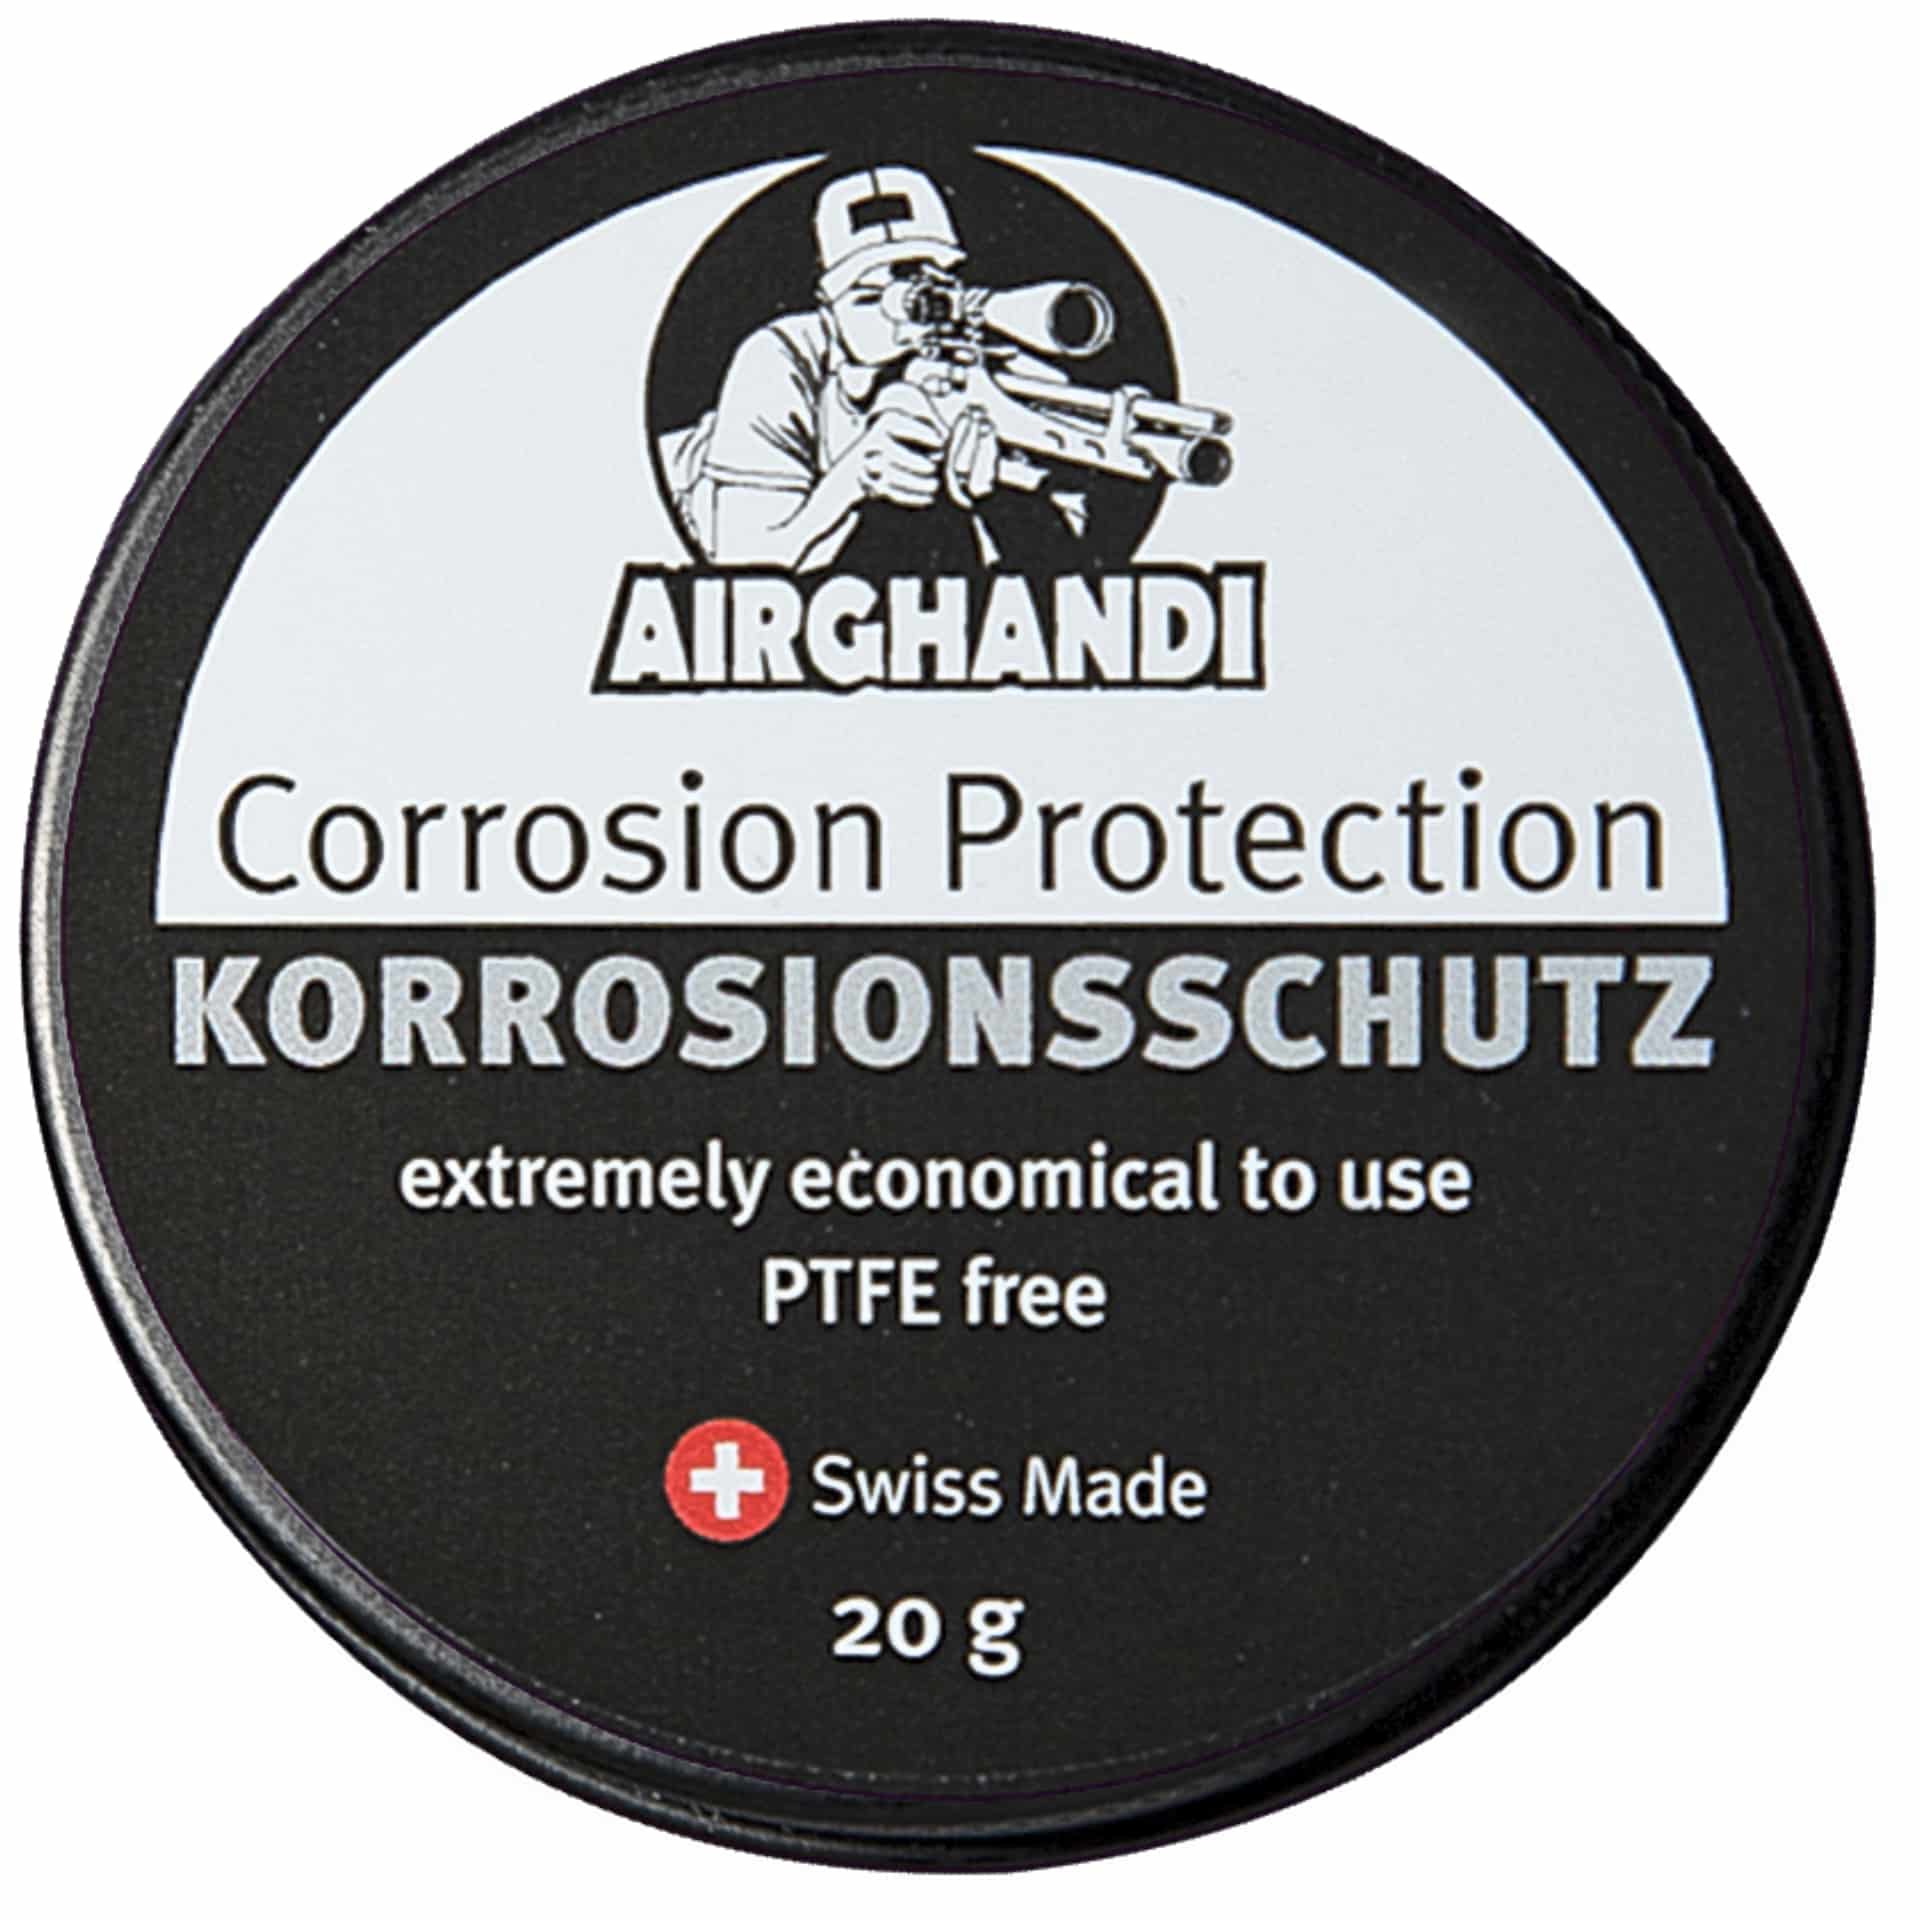 AirGhandi's Korrosionsschutz